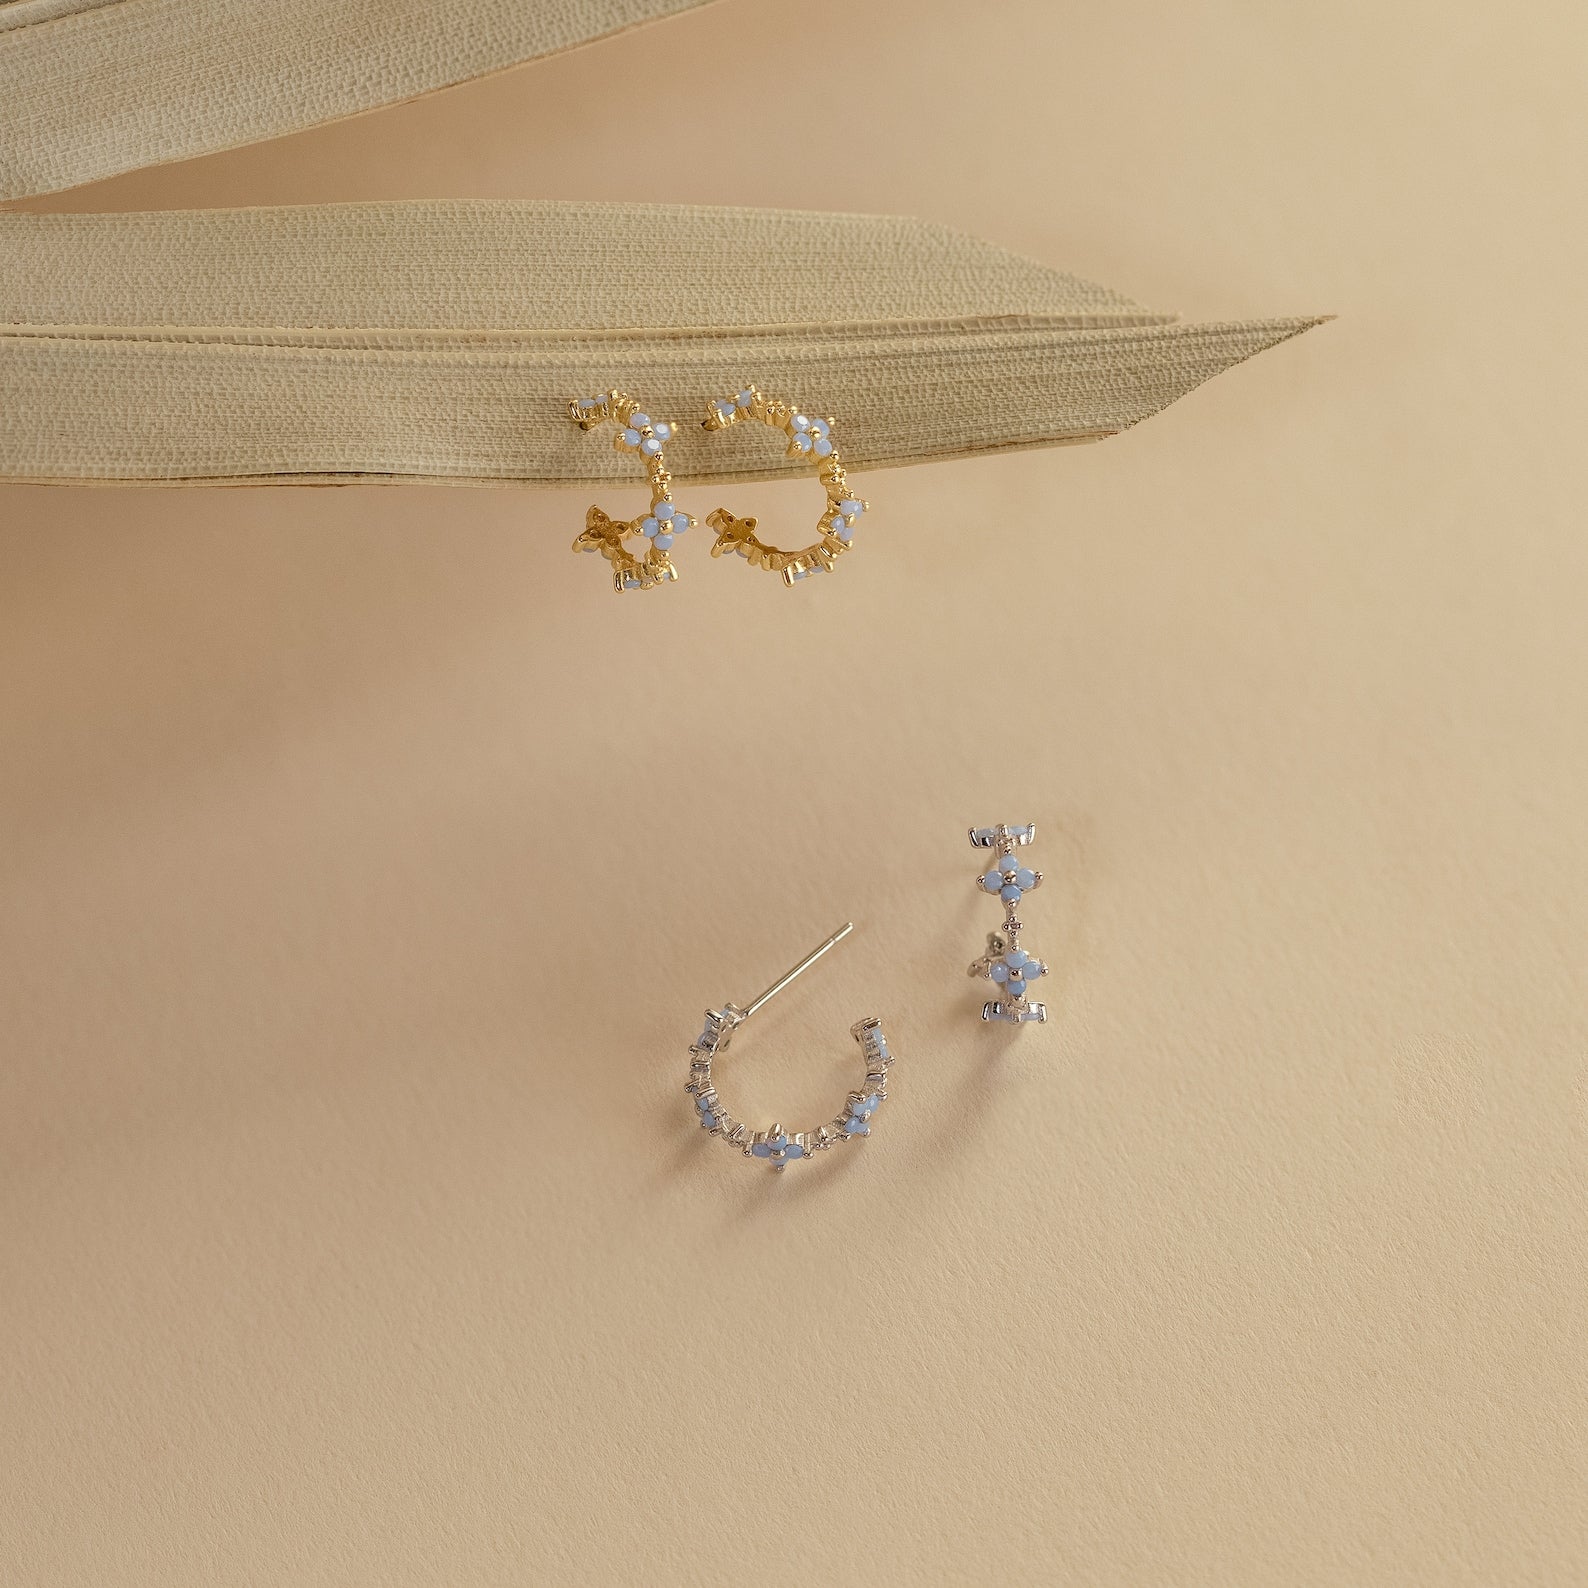 Clay flower bridal earrings - Creamy blossom and silk flower earrings -  Style #951 | Twigs & Honey ®, LLC